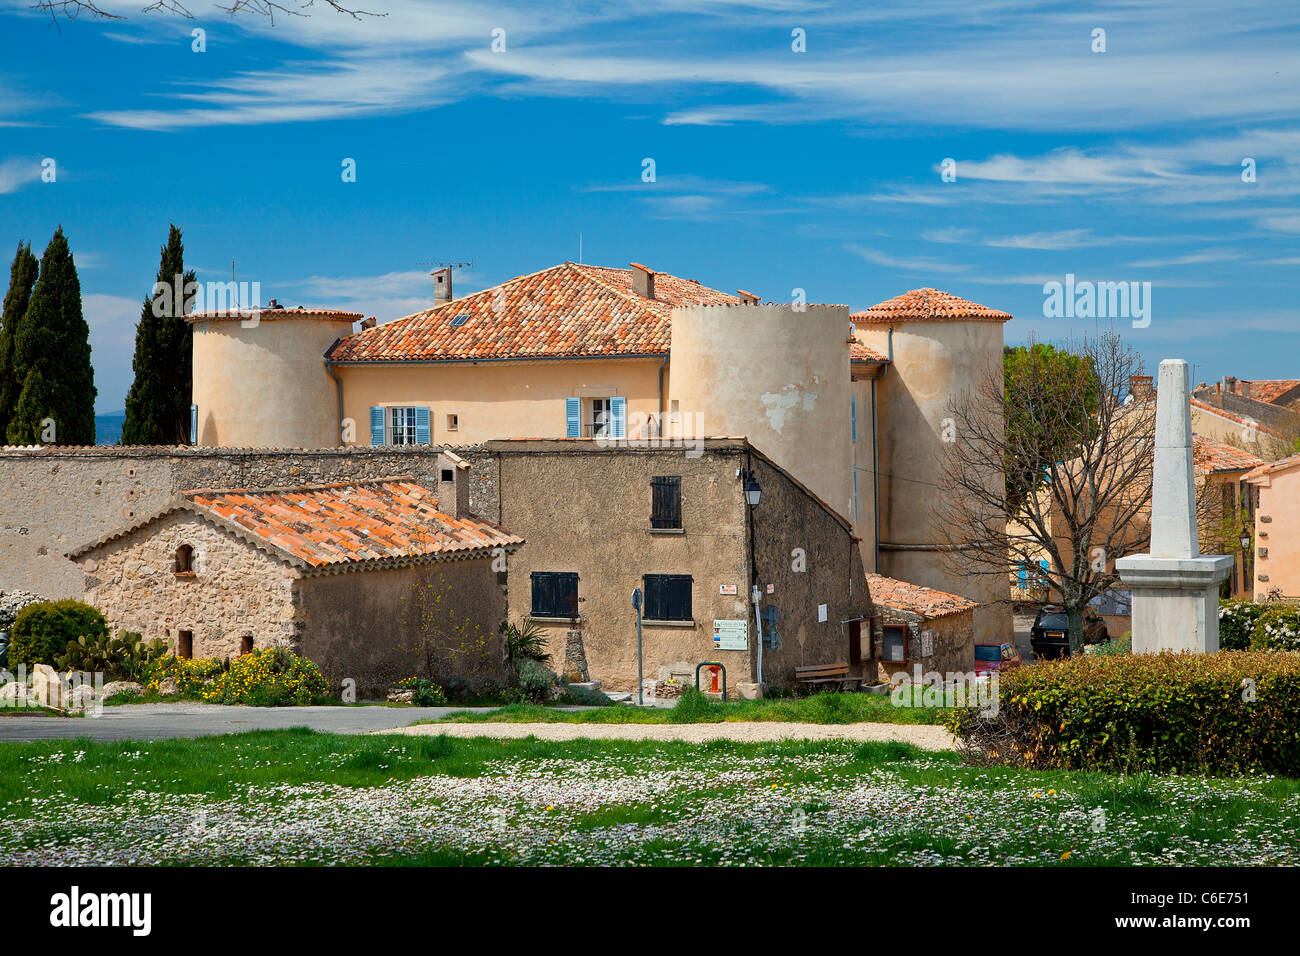 Village of Tourtour, Provence, France Stock Photo